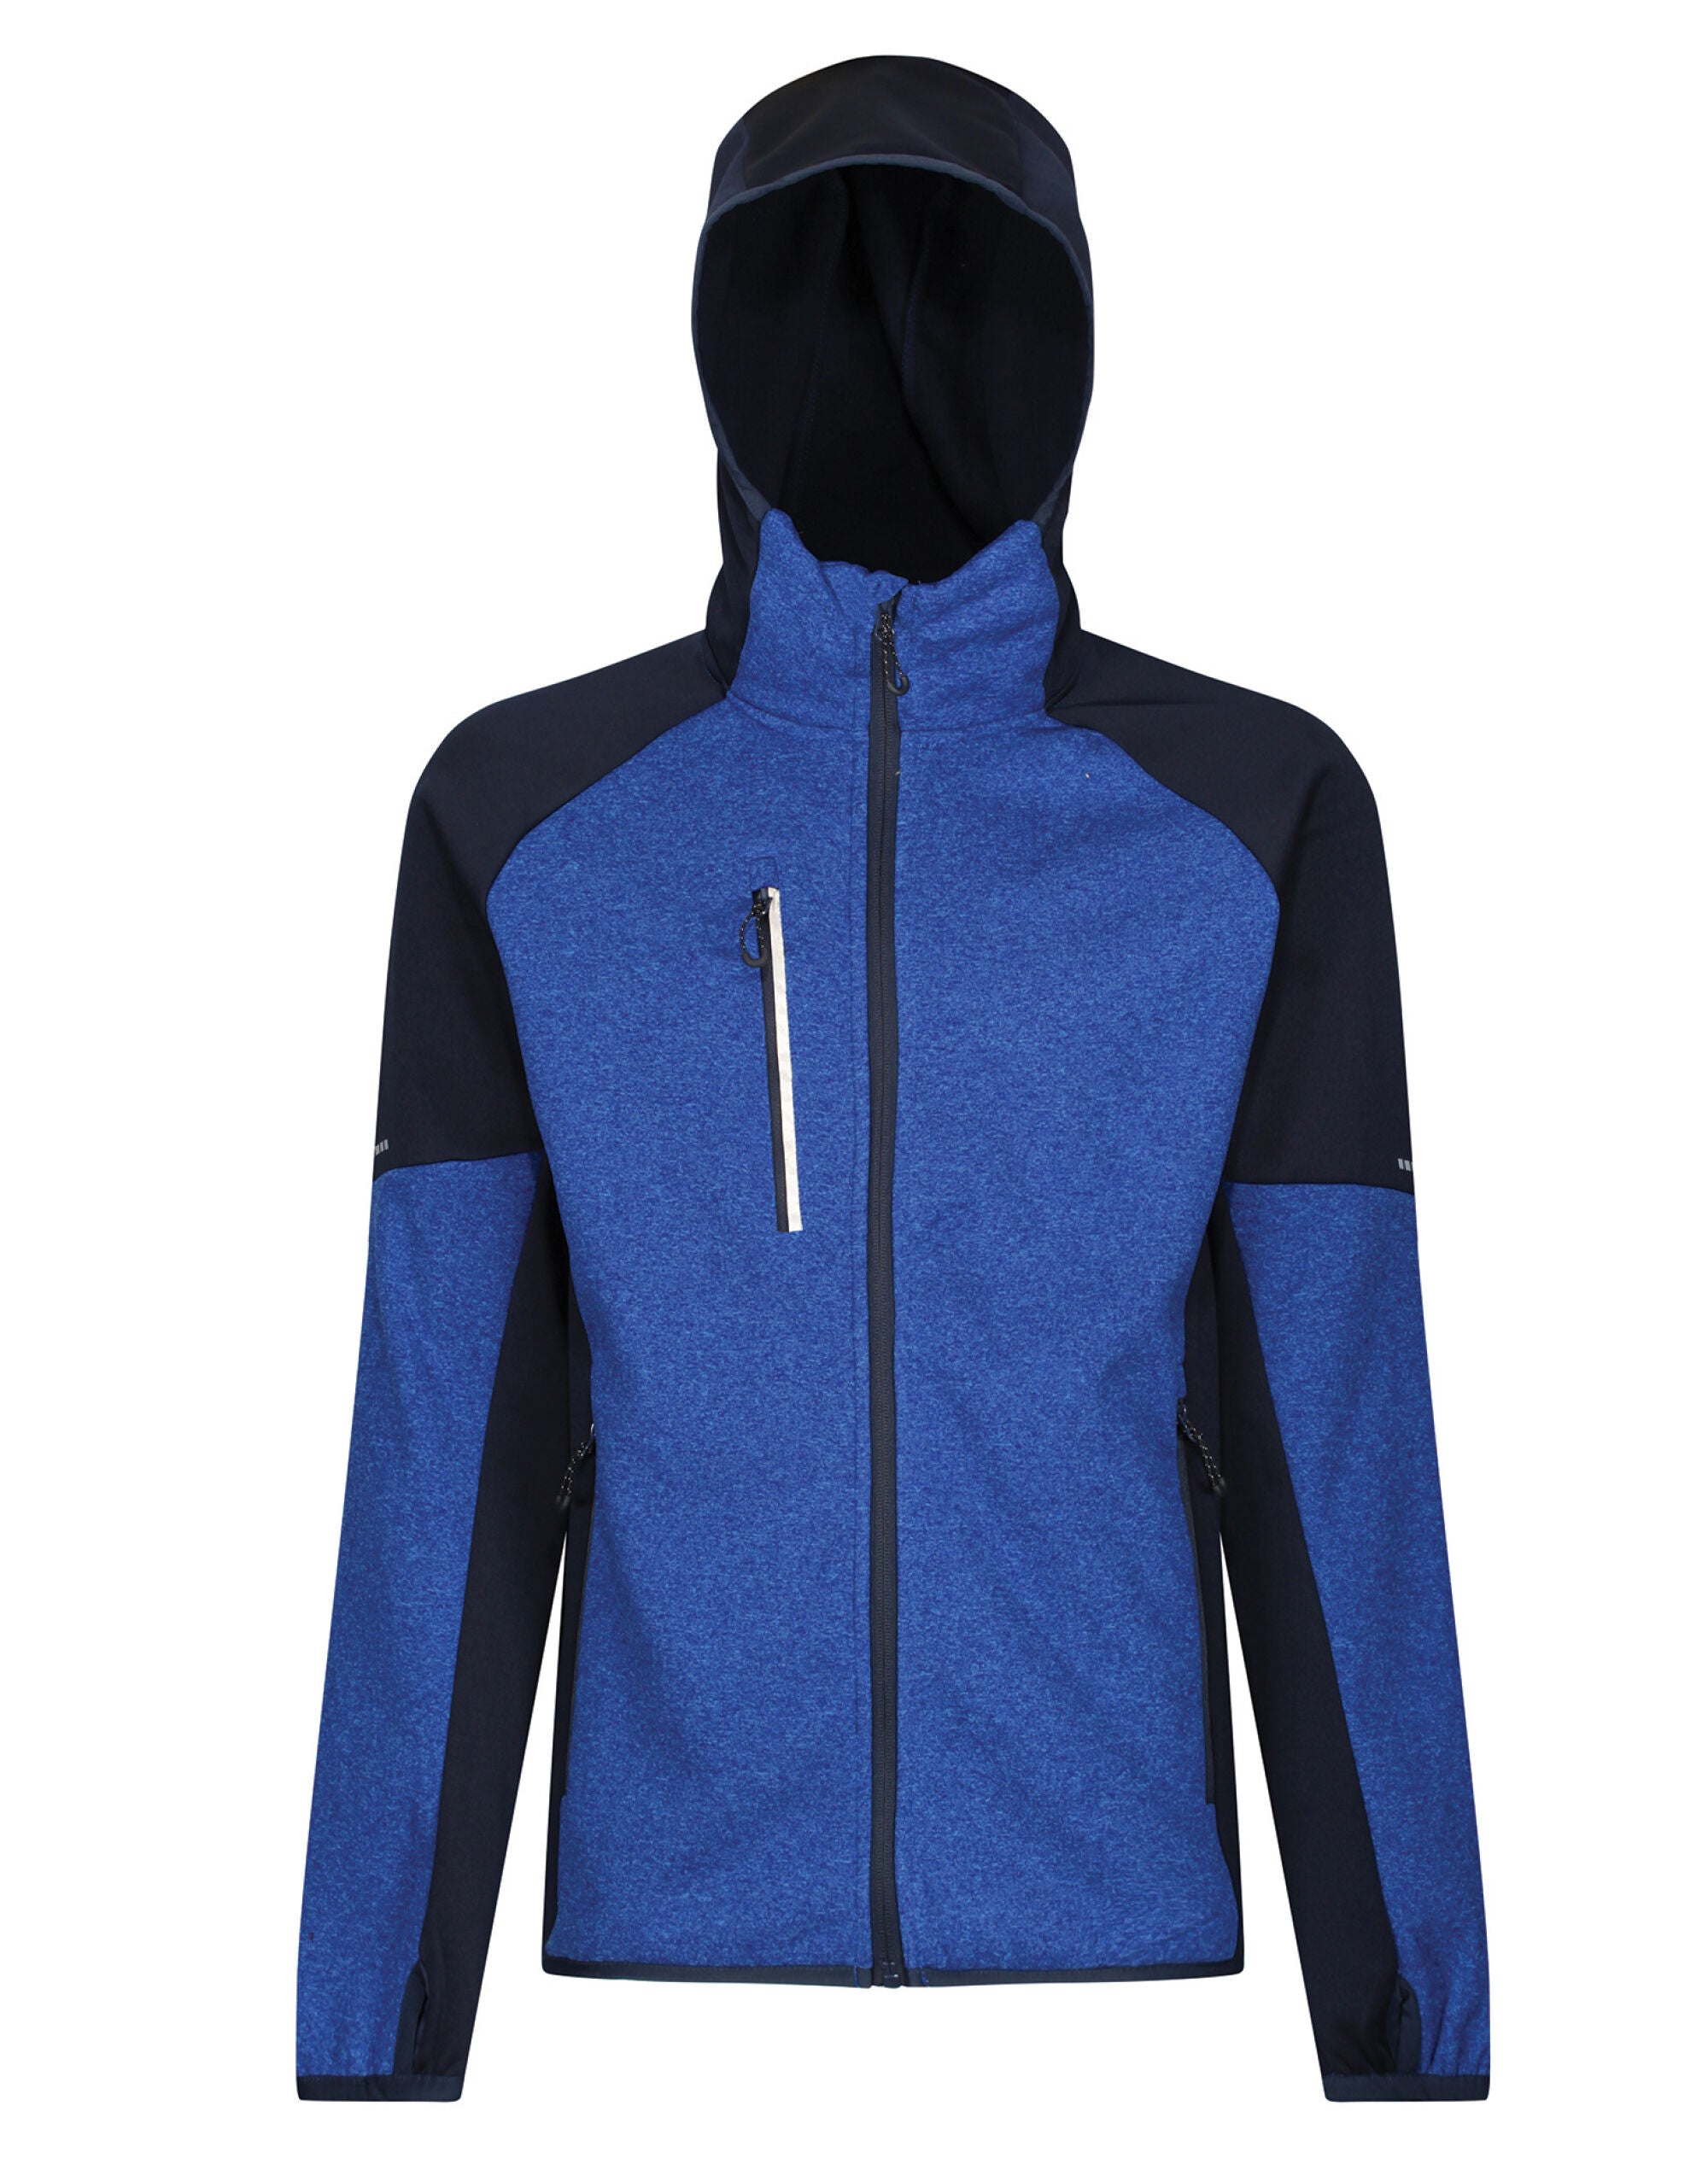 Regatta Professional Coldspring II Fleece Jacket 100&#37; polyester marl knit e&#64256;ect &#64258;eece (TRF620)